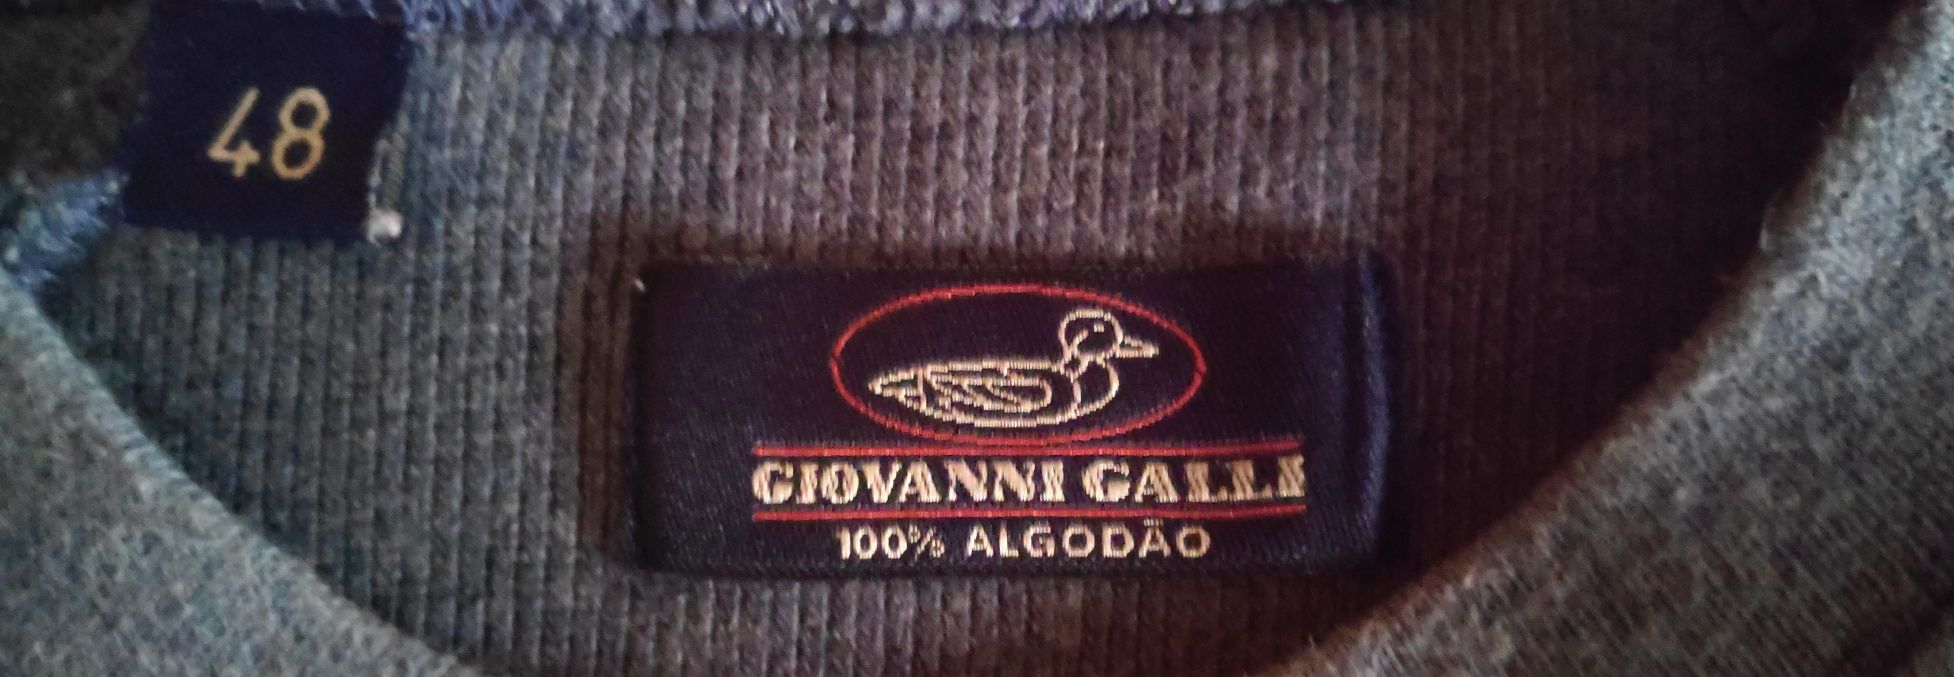 Sweat shirt Giovanni Galli azul algodao